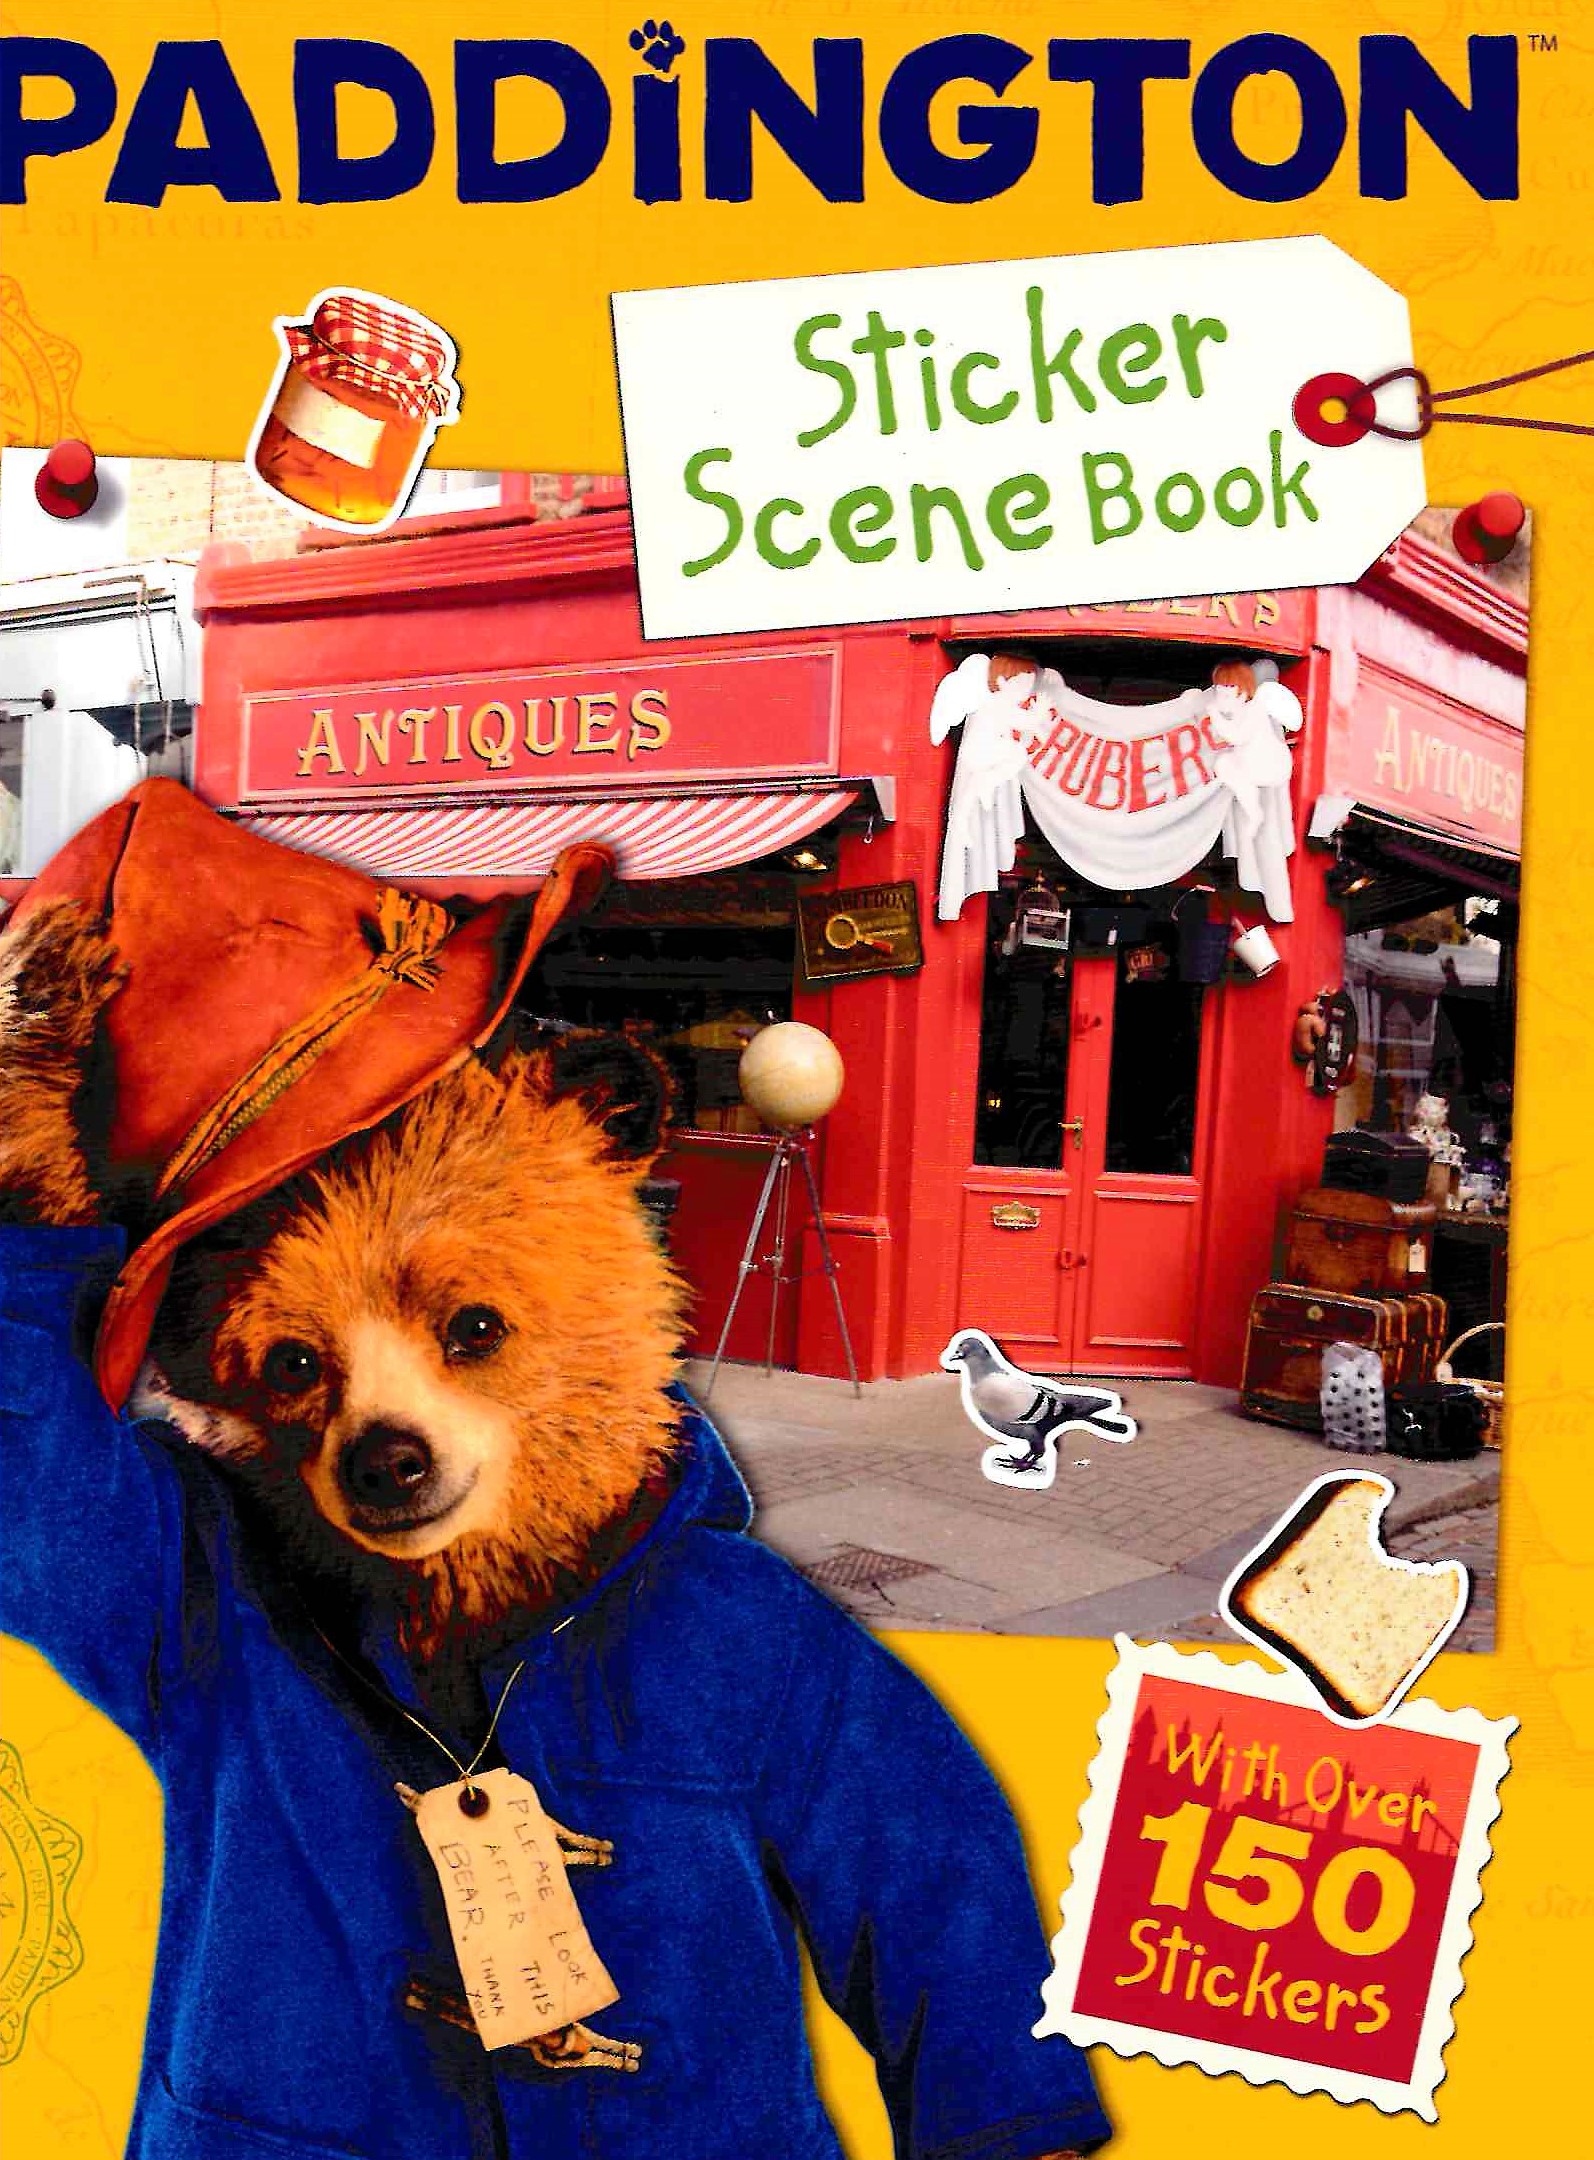 Paddington Sticker Scene Book